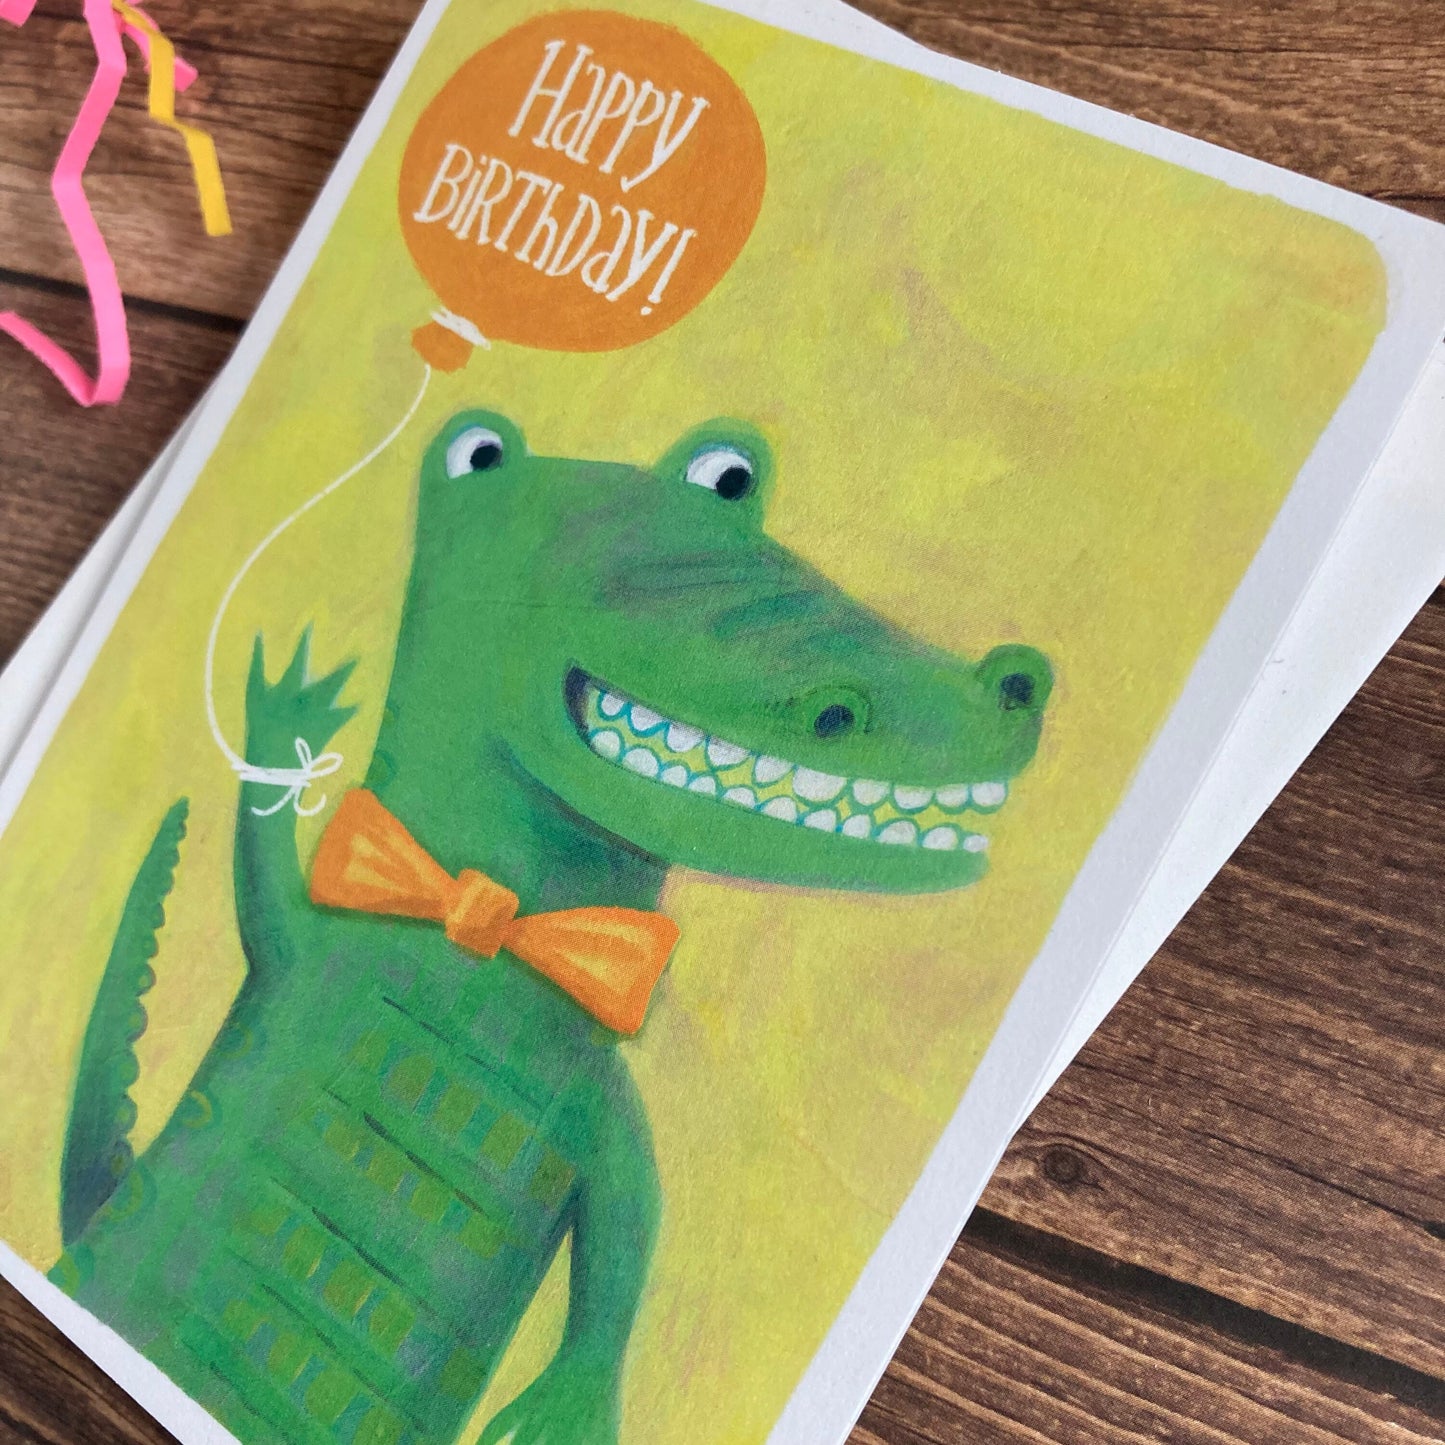 BIRTHDAY - Gator Crocodile Birthday Card, art by Adriana Bergstrom (Adriprints)